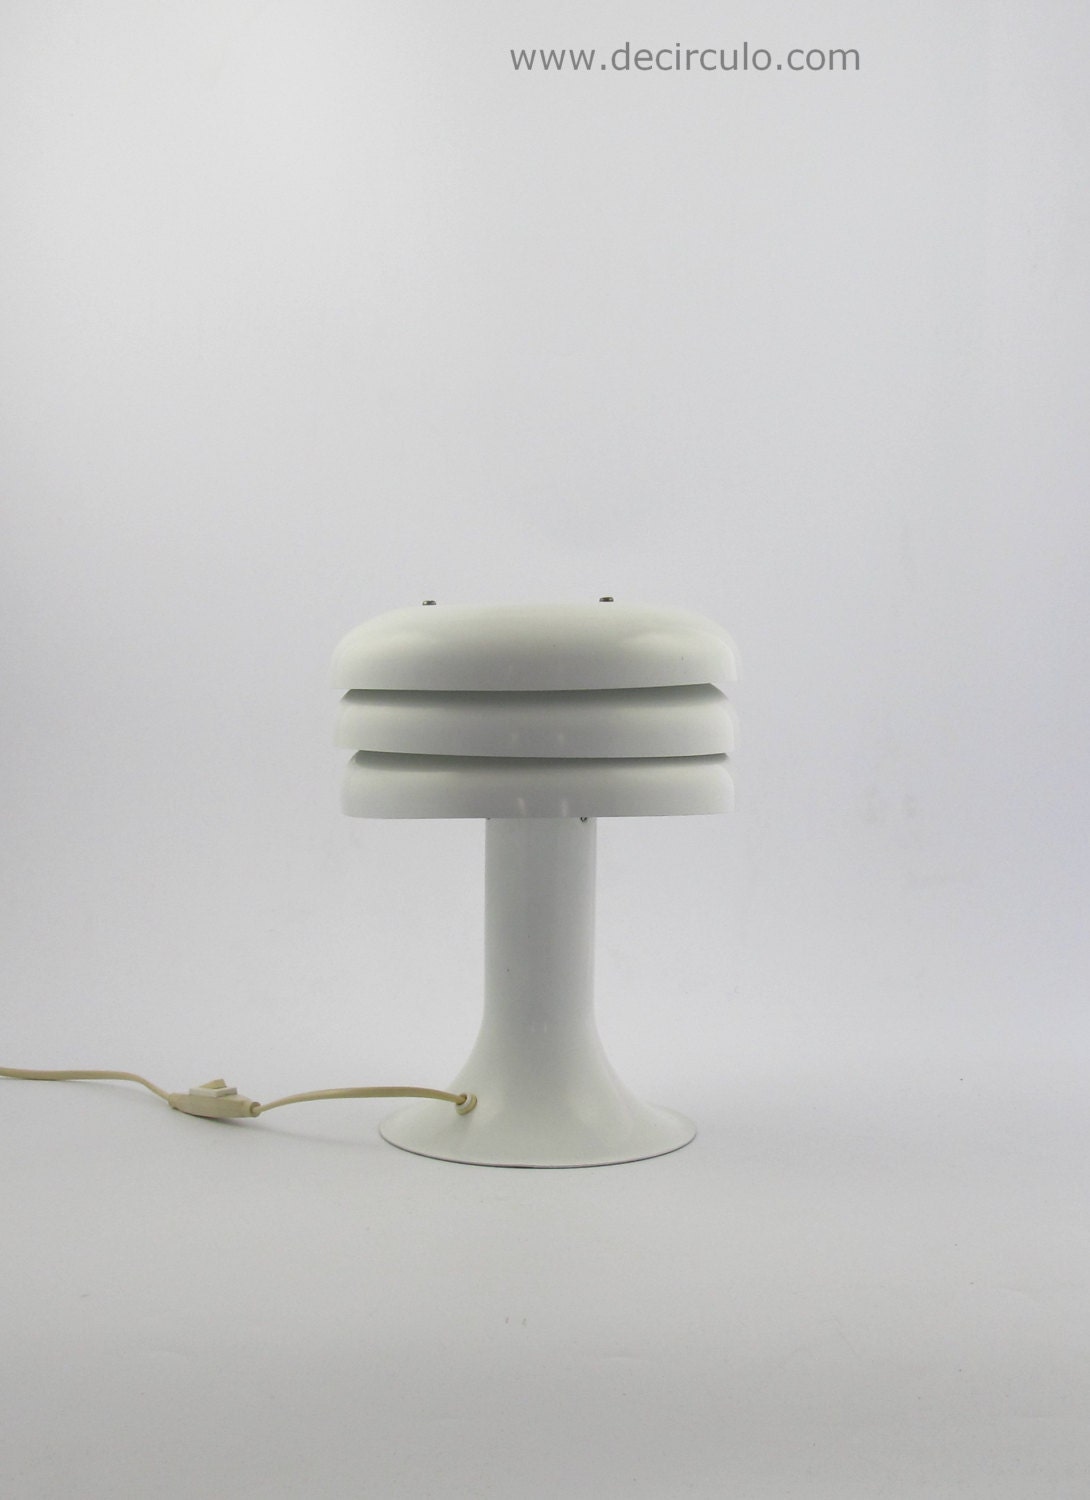 Hans-agne Jakobsson lámpara de escritorio de aluminio, lámpara de mesa de diseño sueco blanca